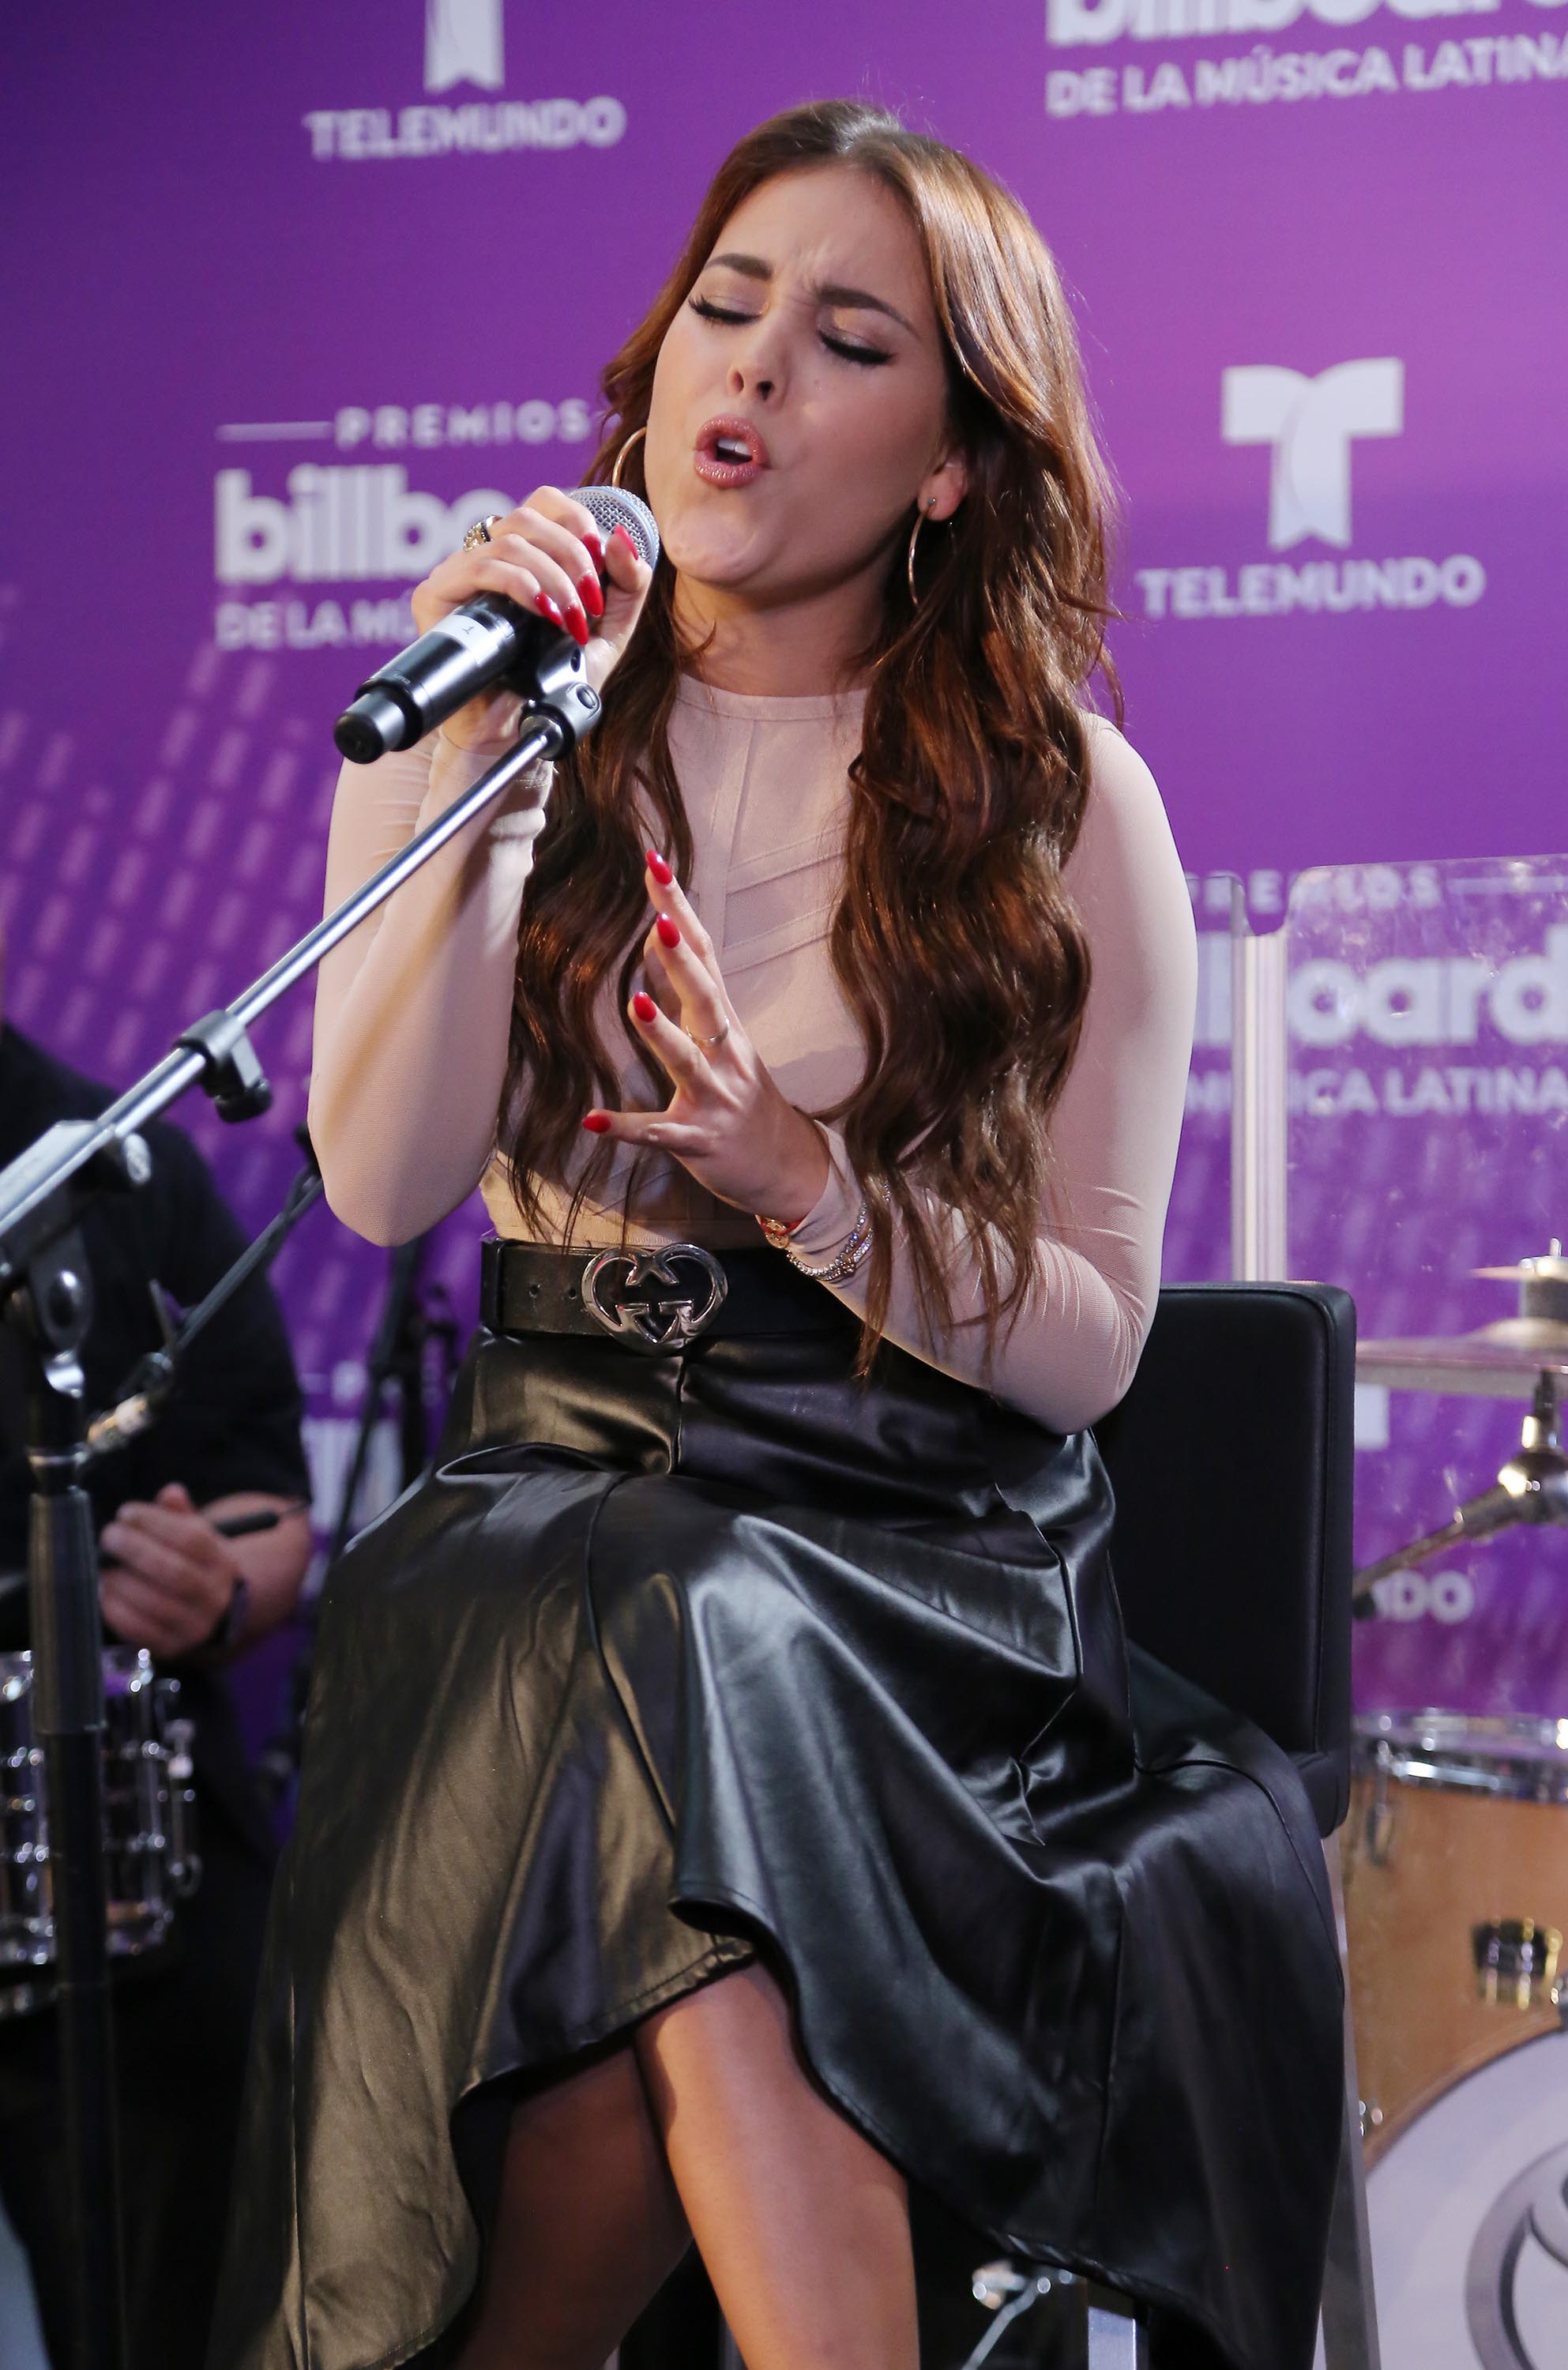 Danna Paola attends the 2017 Billboard Latin Music Awards